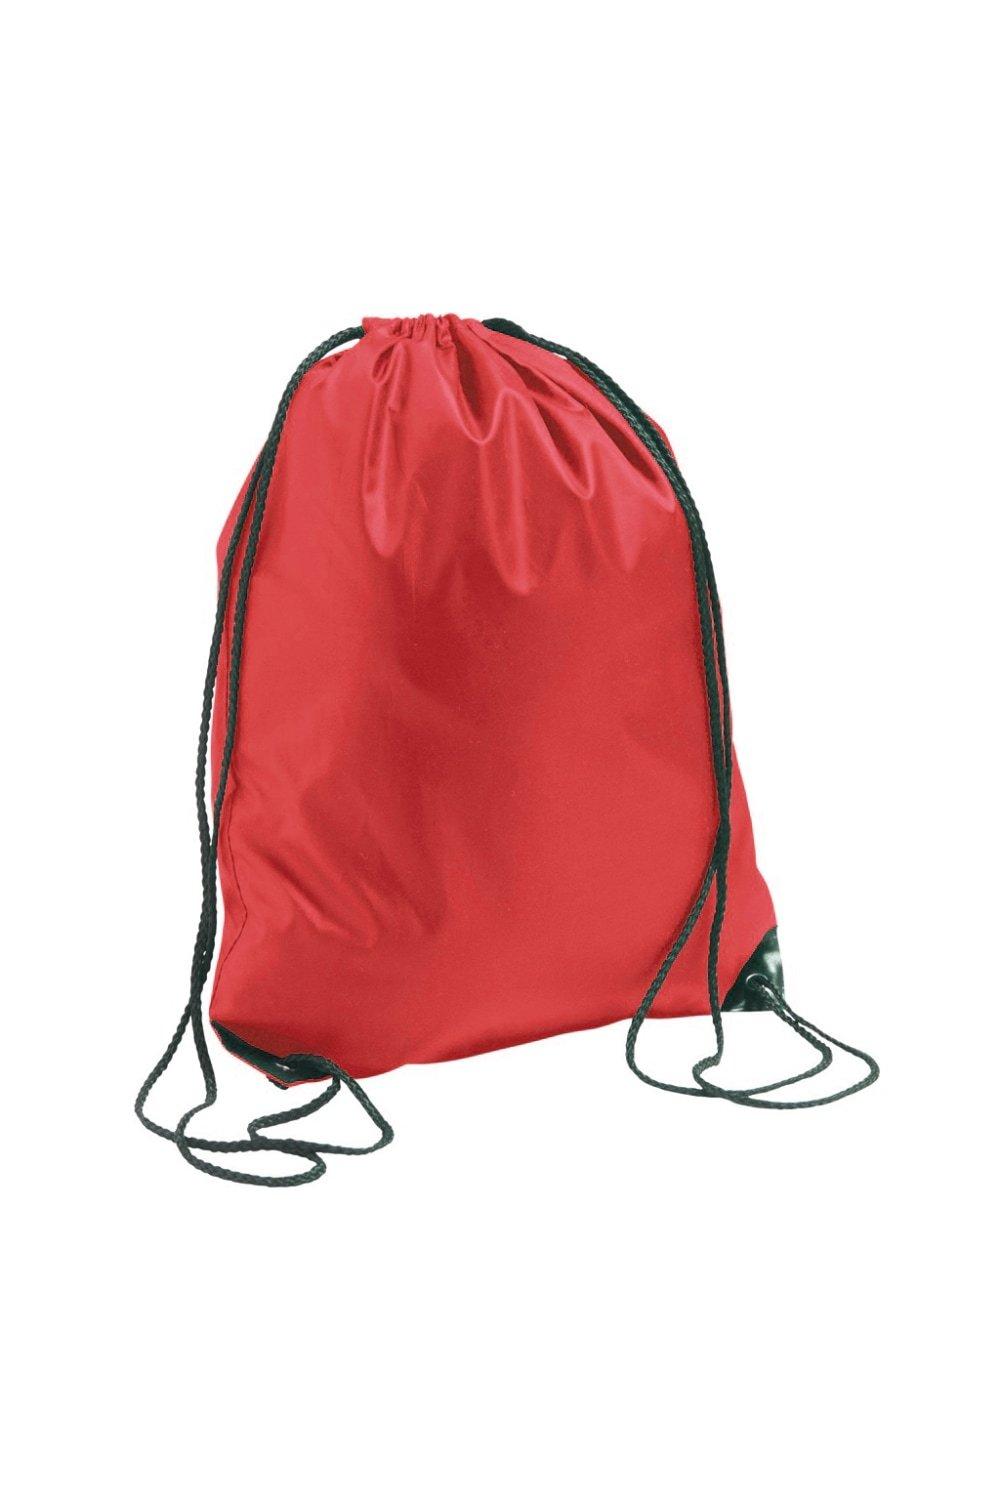 Сумка Urban Gymsac на шнурке SOL'S, красный сумка urban gymsac на шнурке sol s красный